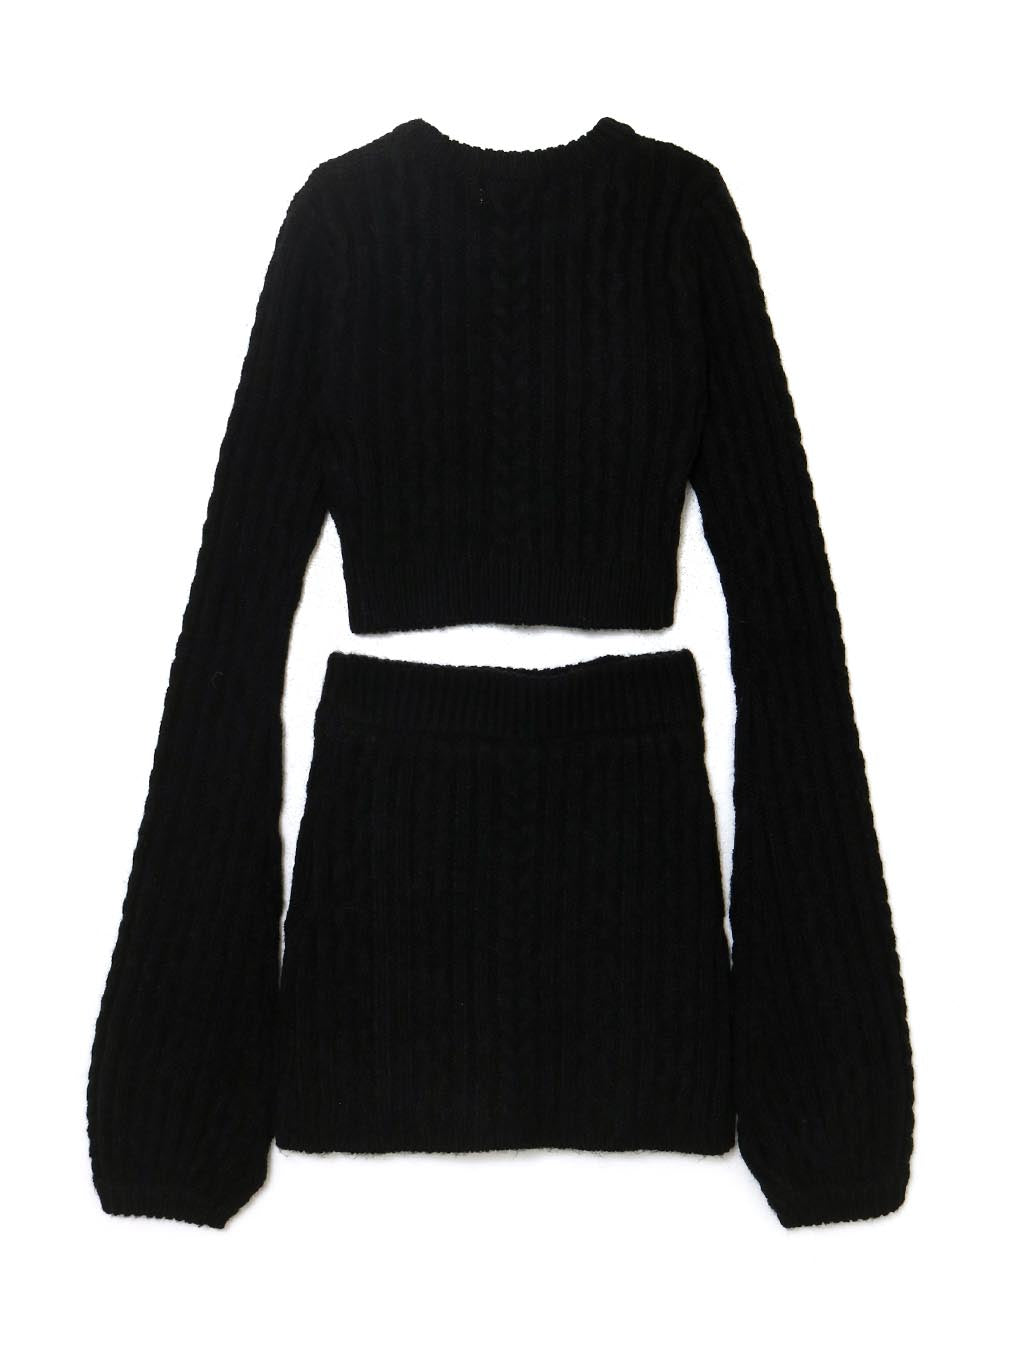 andmary Marie knit set up ブラック【新品未開封】黒瀧まりあ